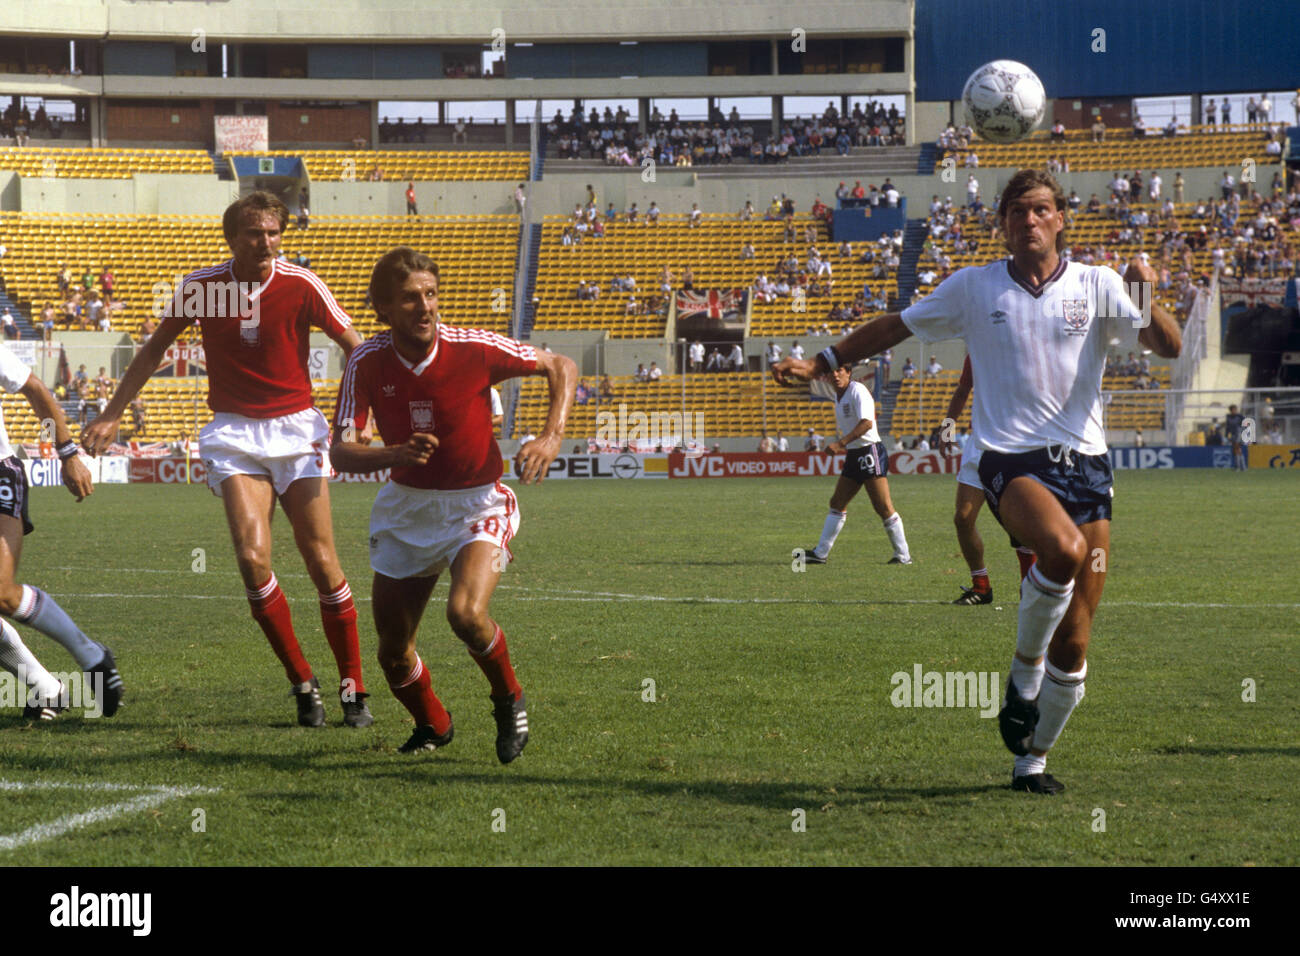 Soccer - FIFA World Cup Mexico 1986 - Group F - England v Poland - Universitario Stadium. England's Glenn Hoddle in action (r) watched by Poland's Roman Wojcicki (l) Stefan Majewski (c). Stock Photo